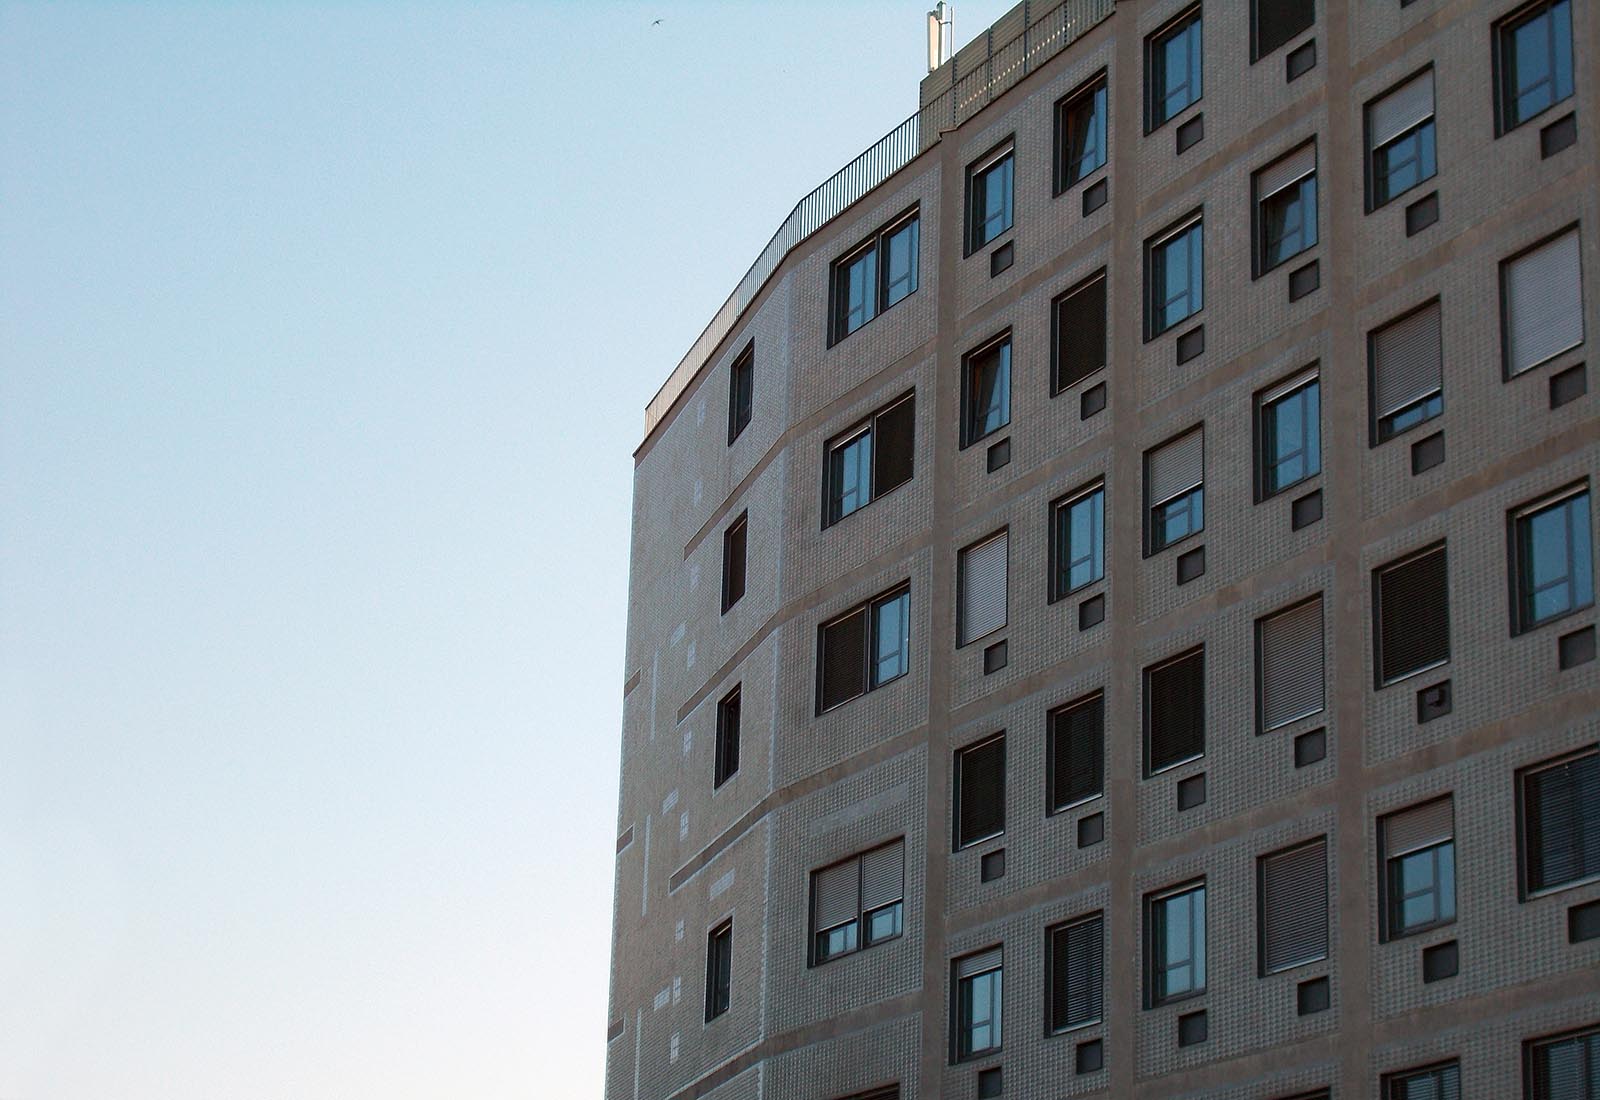 Building 14 Politecnico di Milano - Detail of the west facade